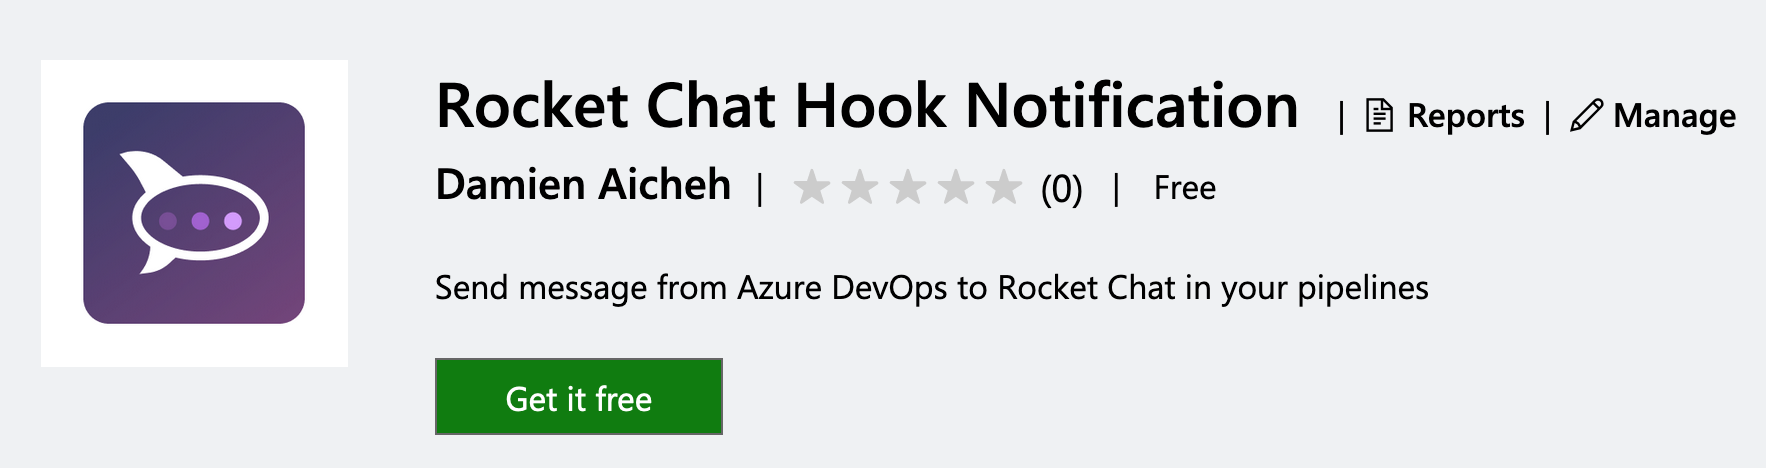 Rocket Chat Task